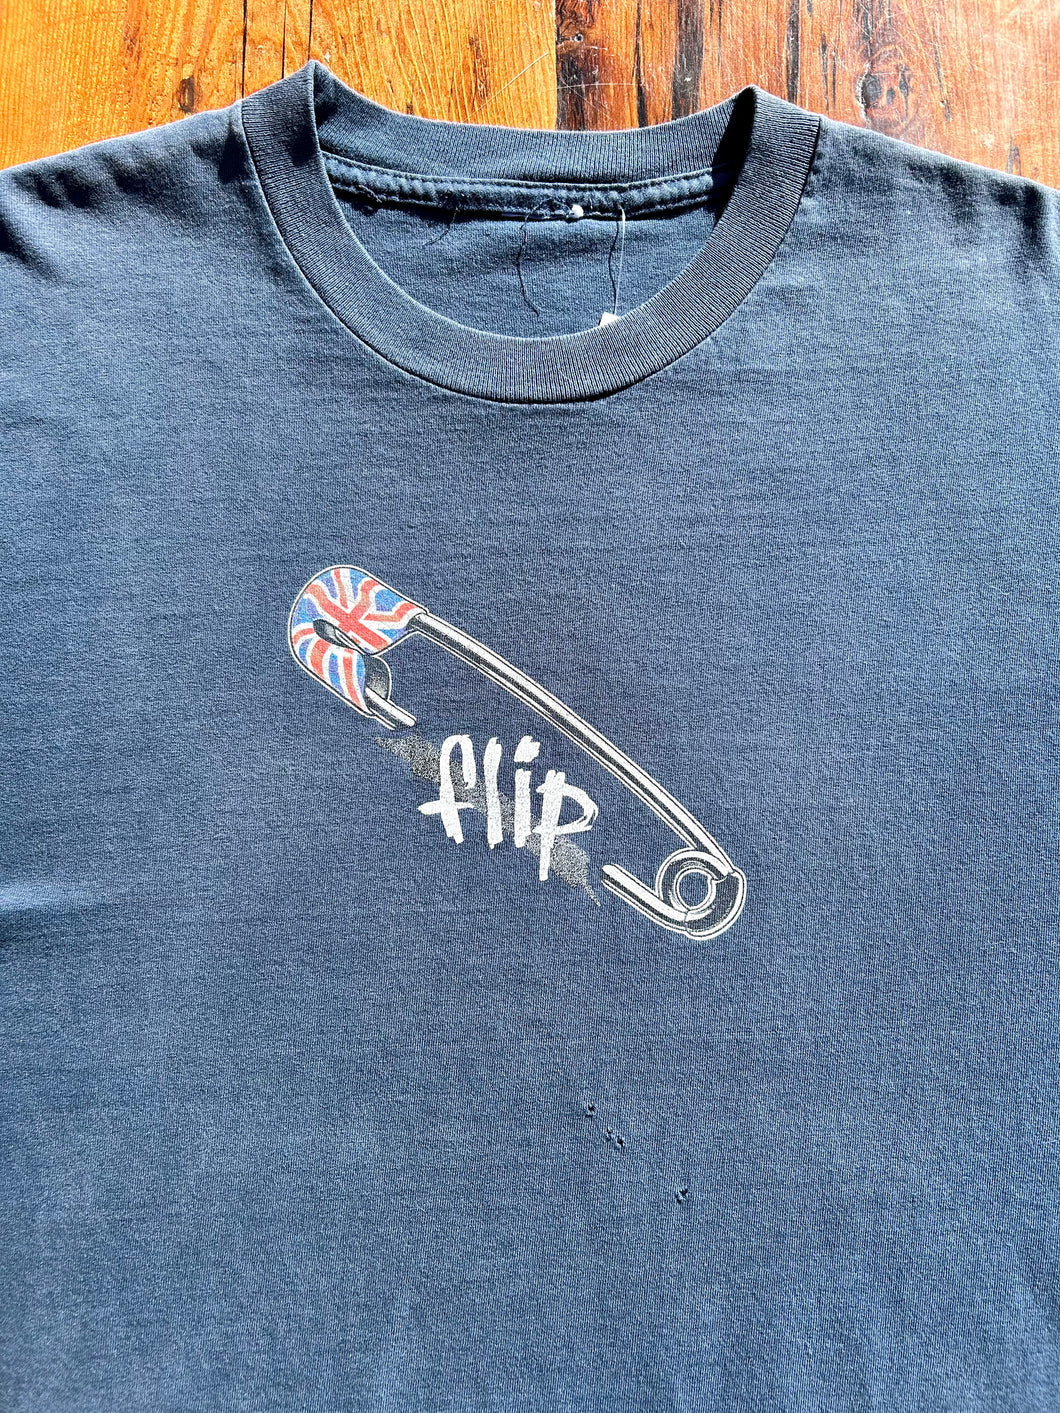 90s Flip Skateboards Paperclip T-Shirt. Size Large